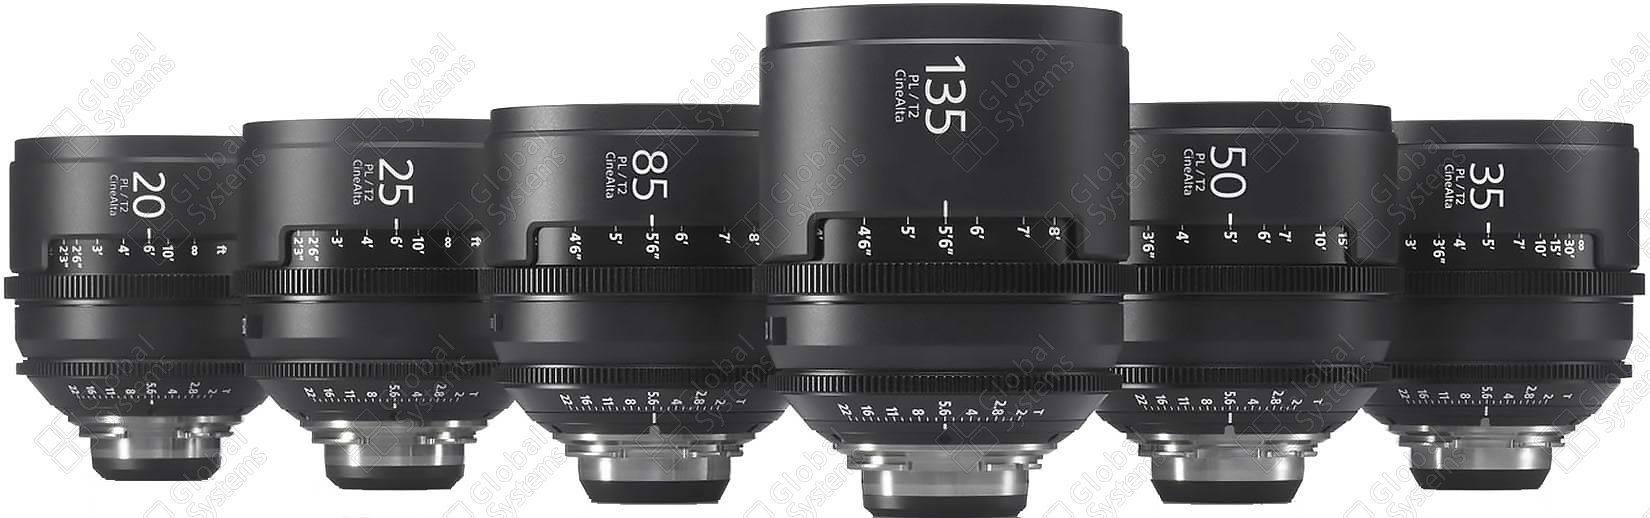 SCL-PK6/F комплект из 6 объективов Sony